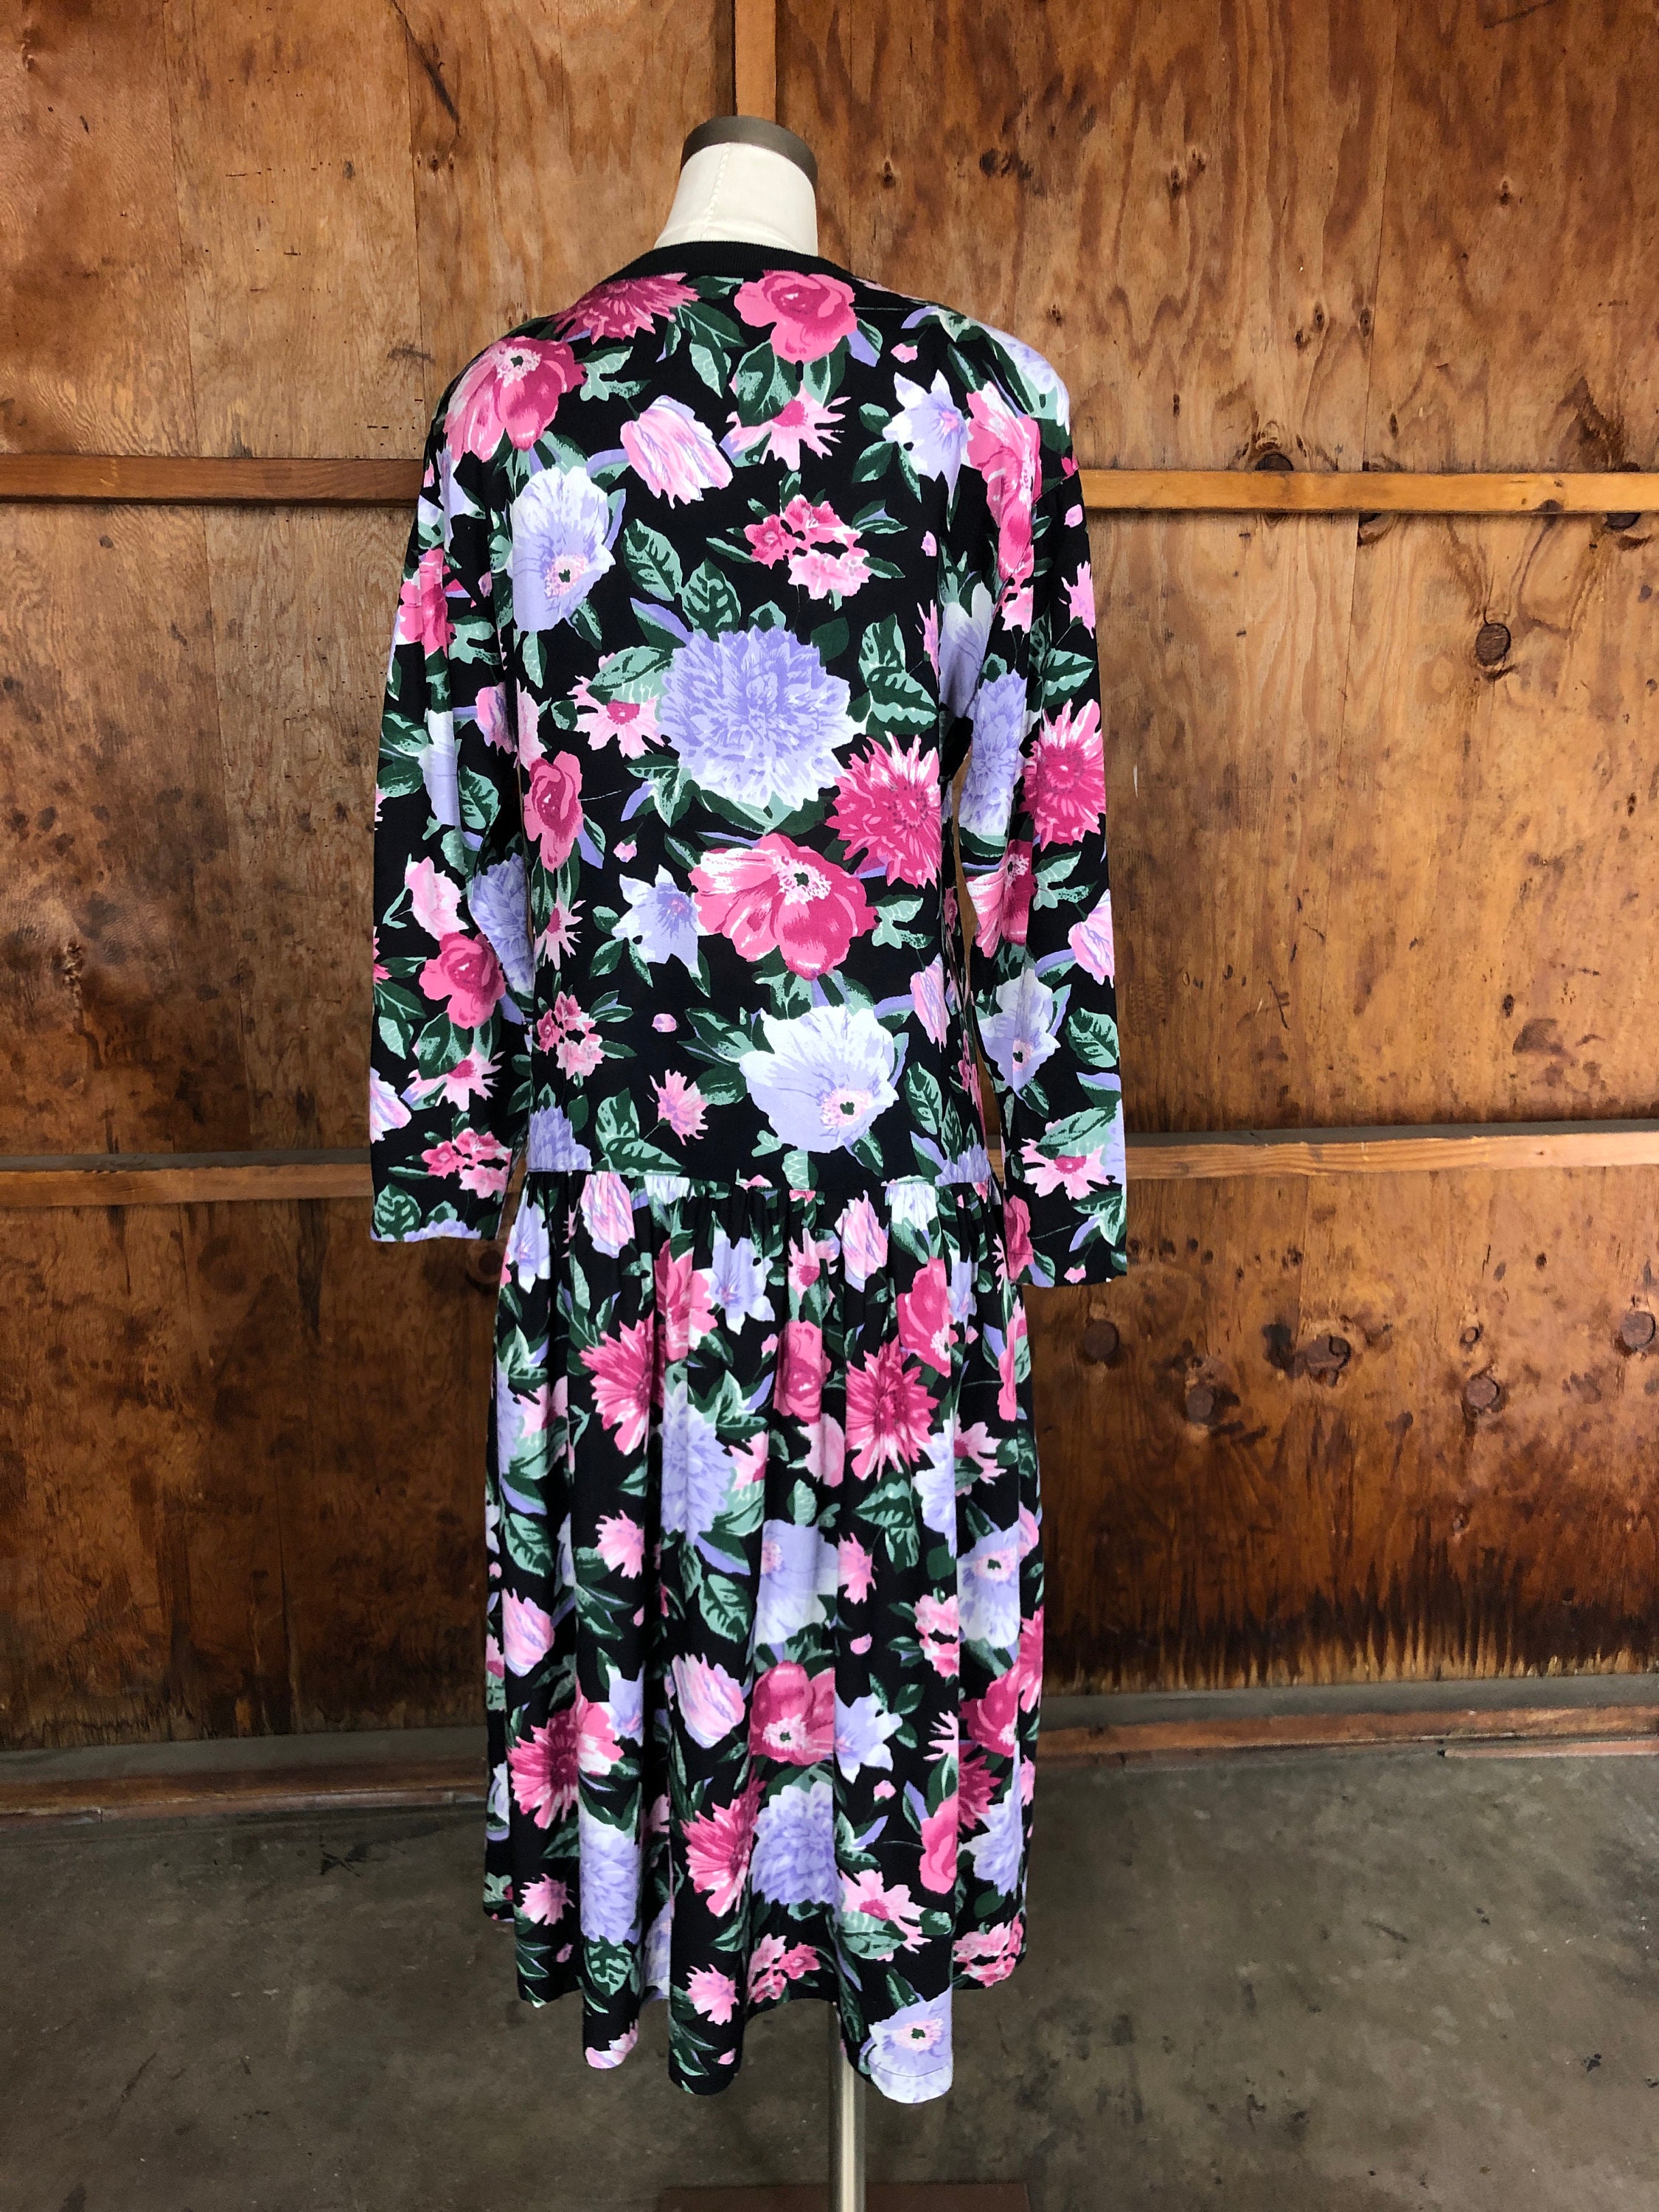 Vintage 80s Drop Waist Floral Dress S. Roberts | Etsy